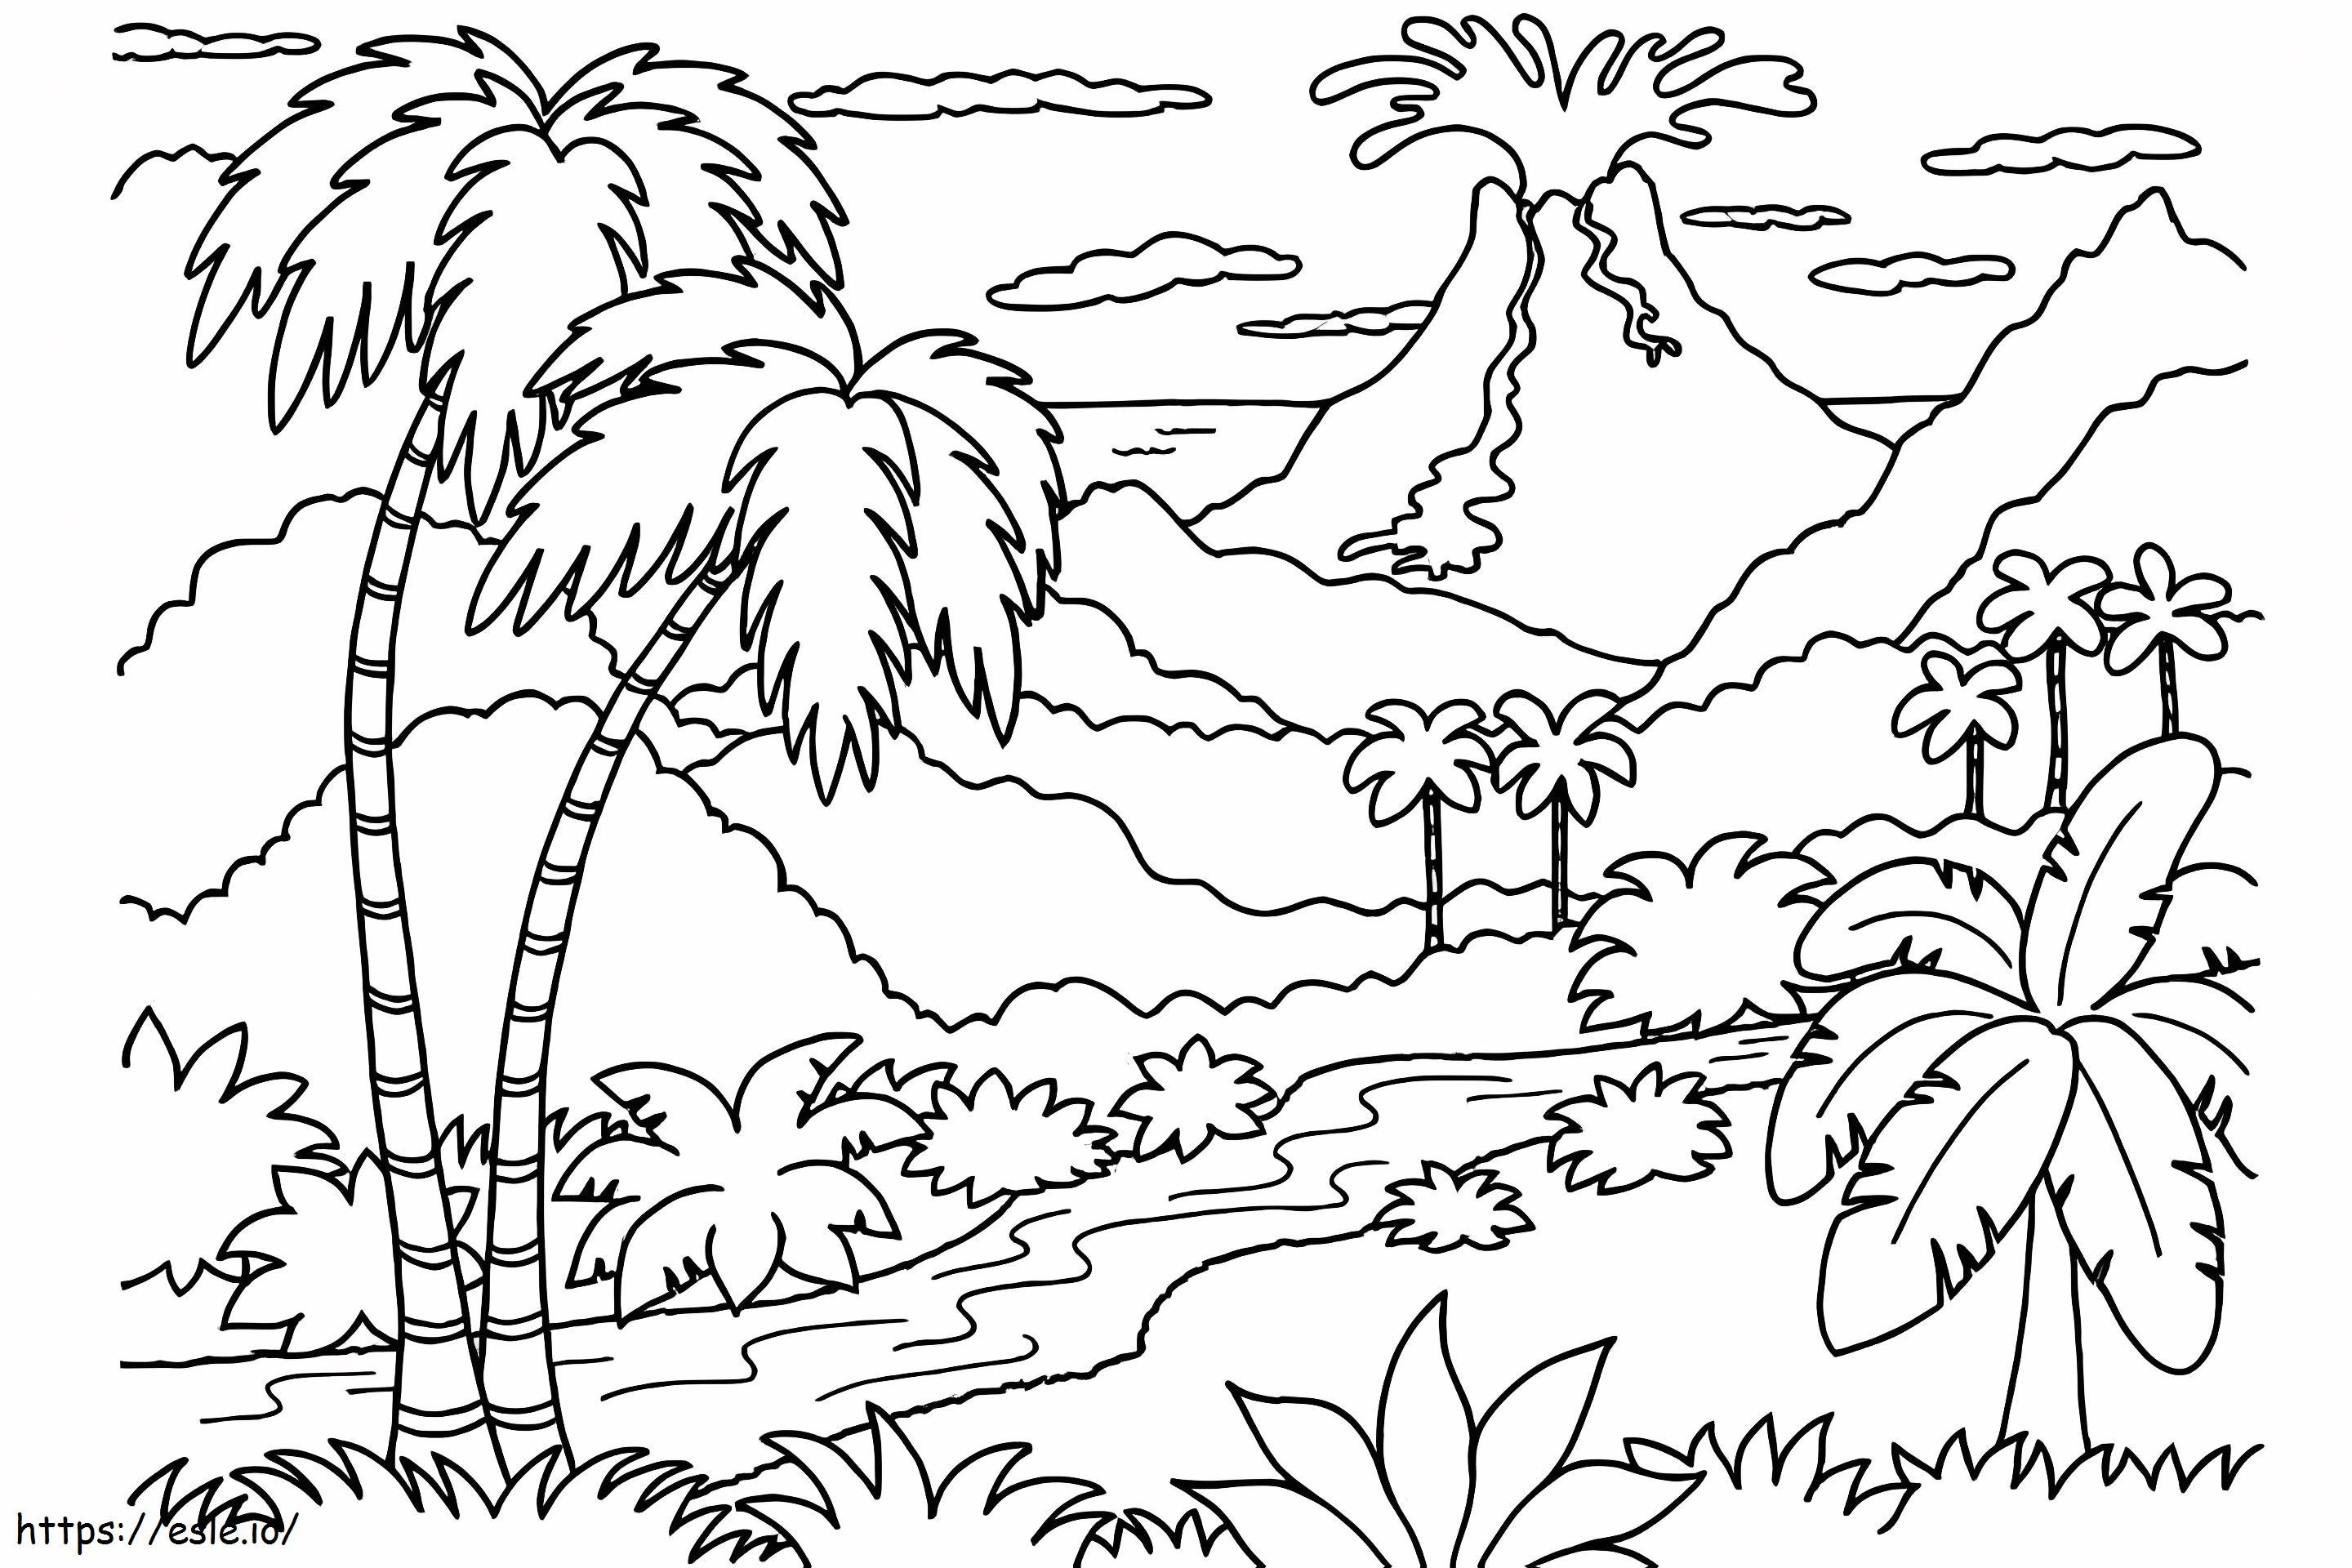 Volcanic Landscape coloring page